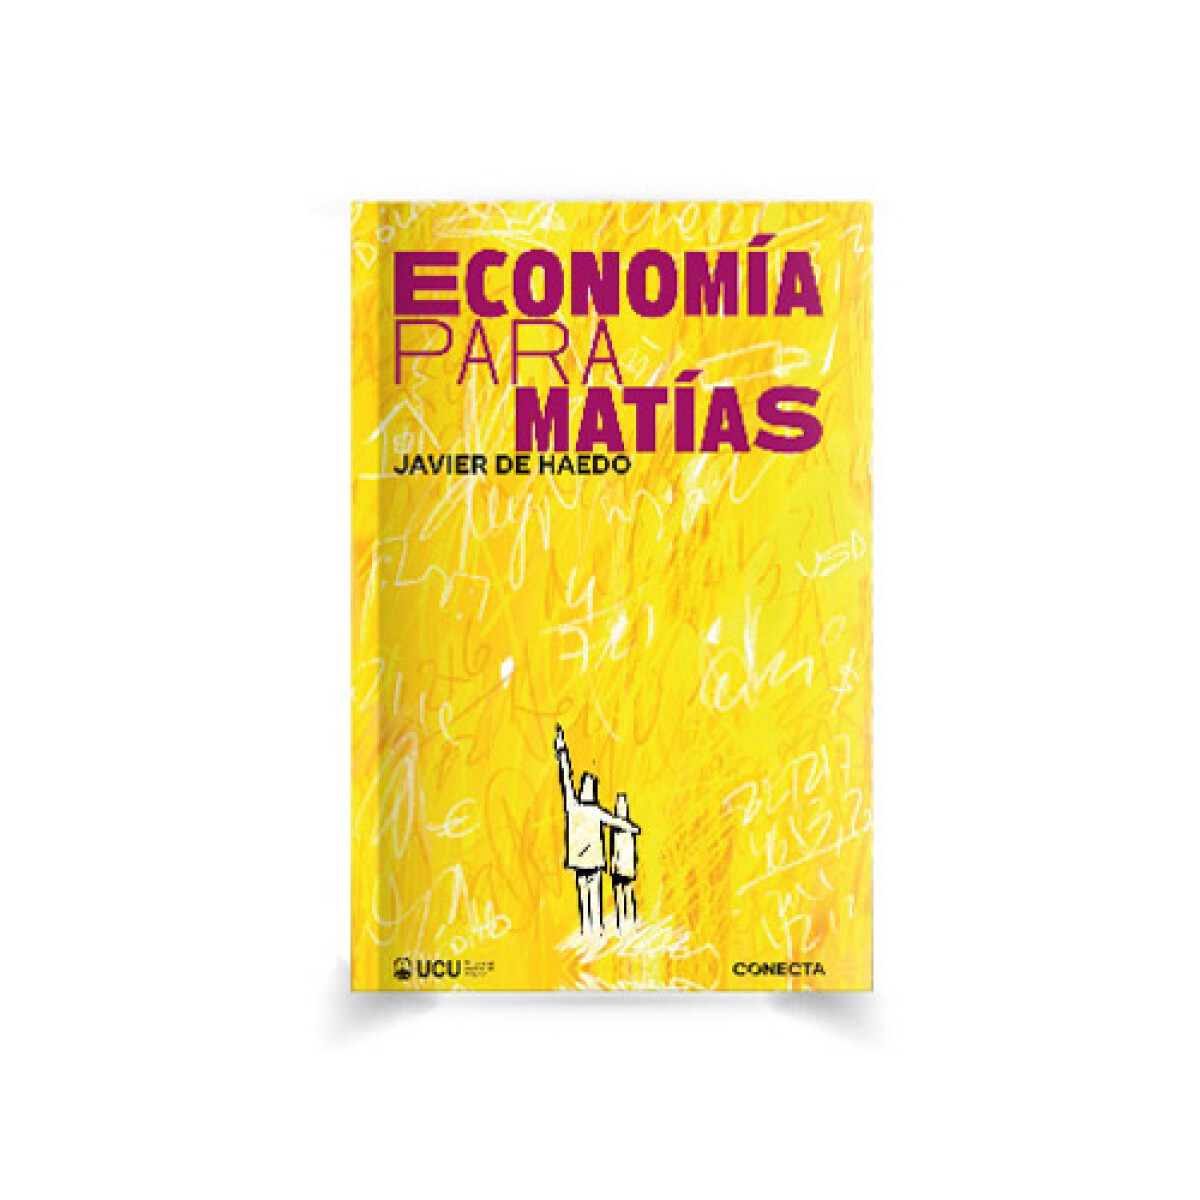 Libro Economía para Matías Javier de Haedo 